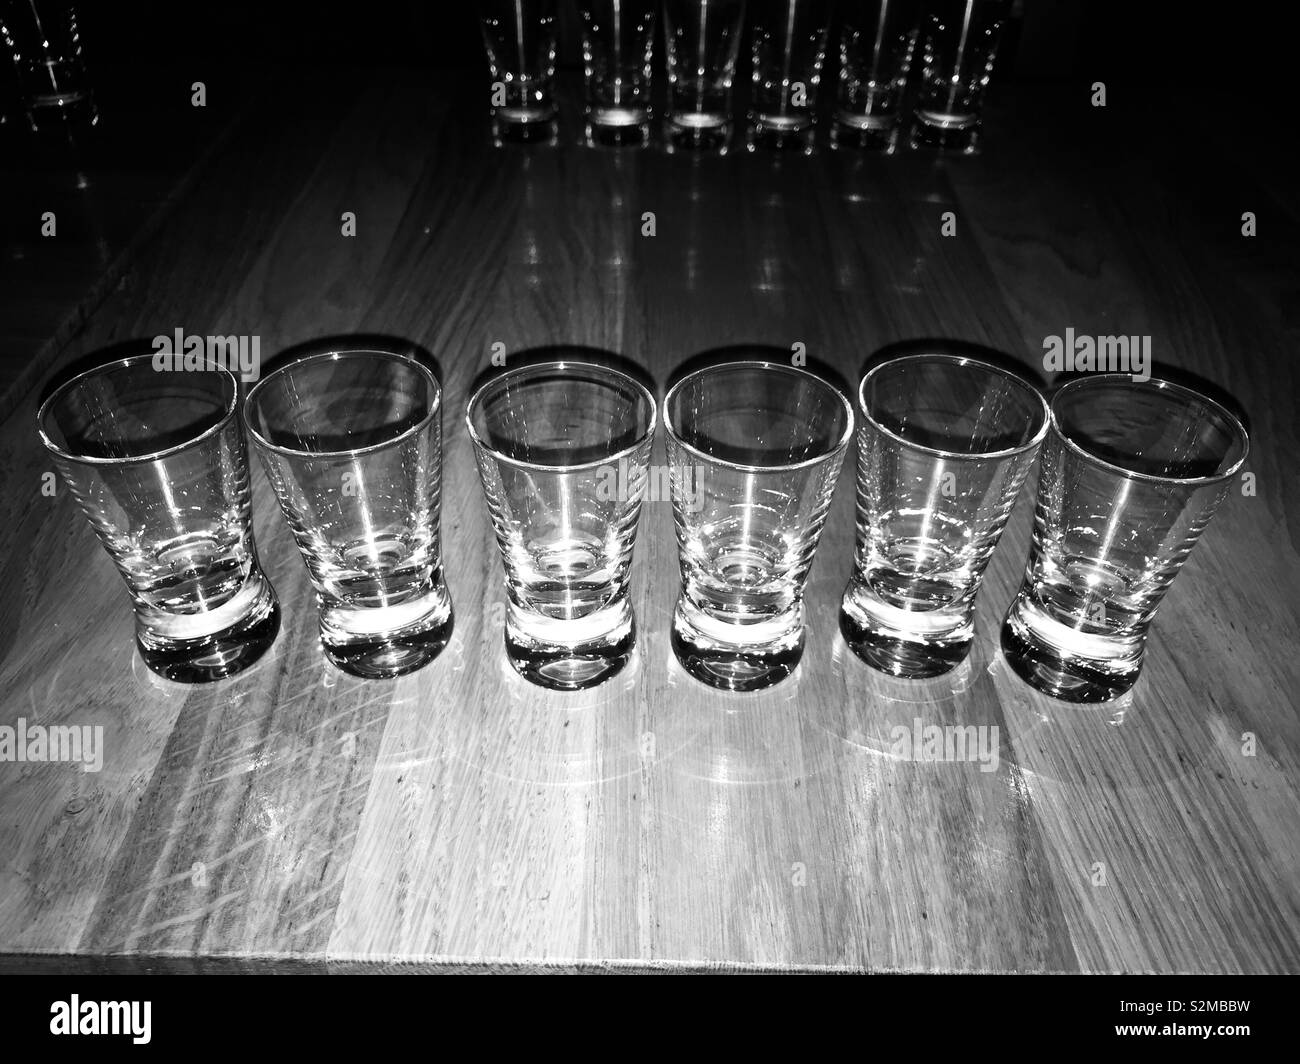 https://c8.alamy.com/comp/S2MBBW/vodka-shot-glasses-S2MBBW.jpg